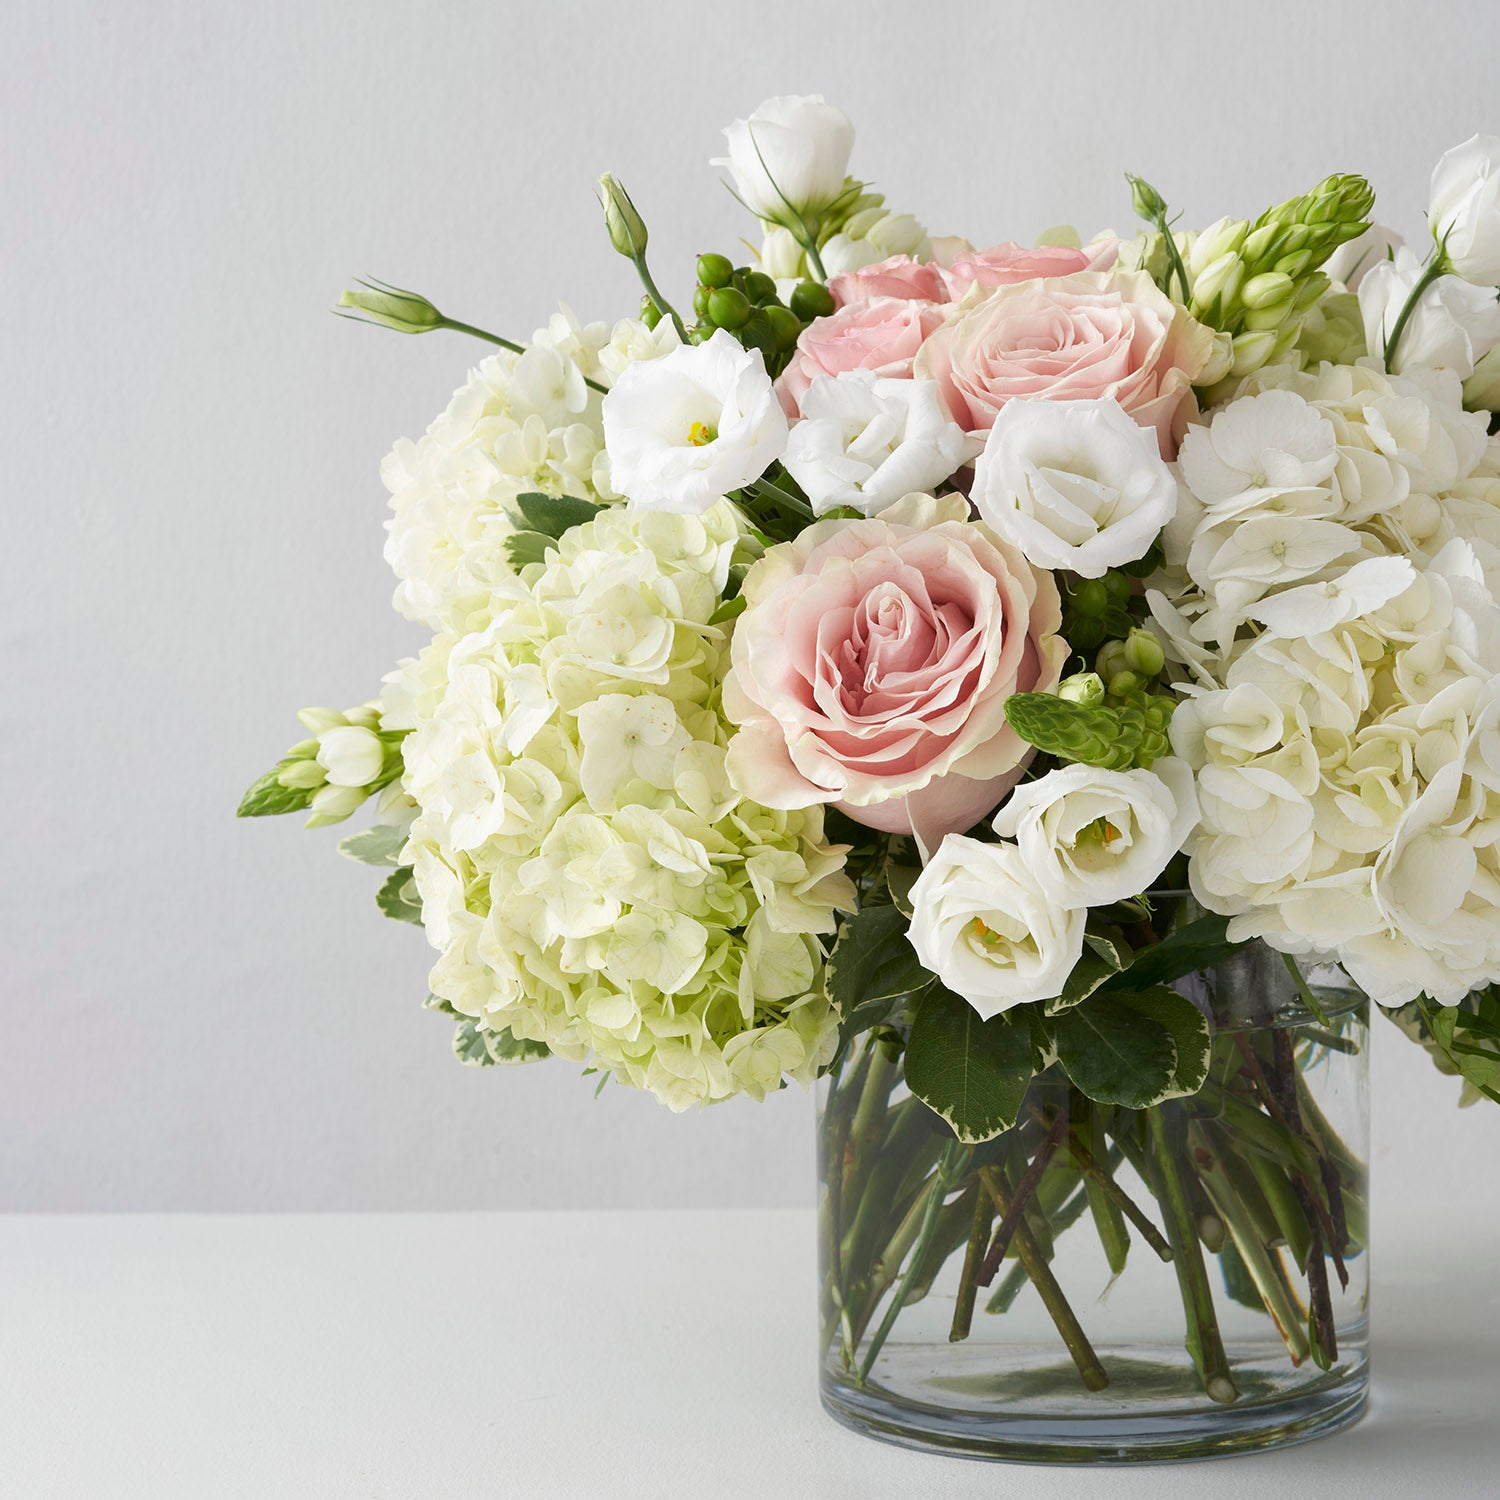 Pink Mondial roses, white hydrangea, and white lisianthus in clear glass vase on white backfground.